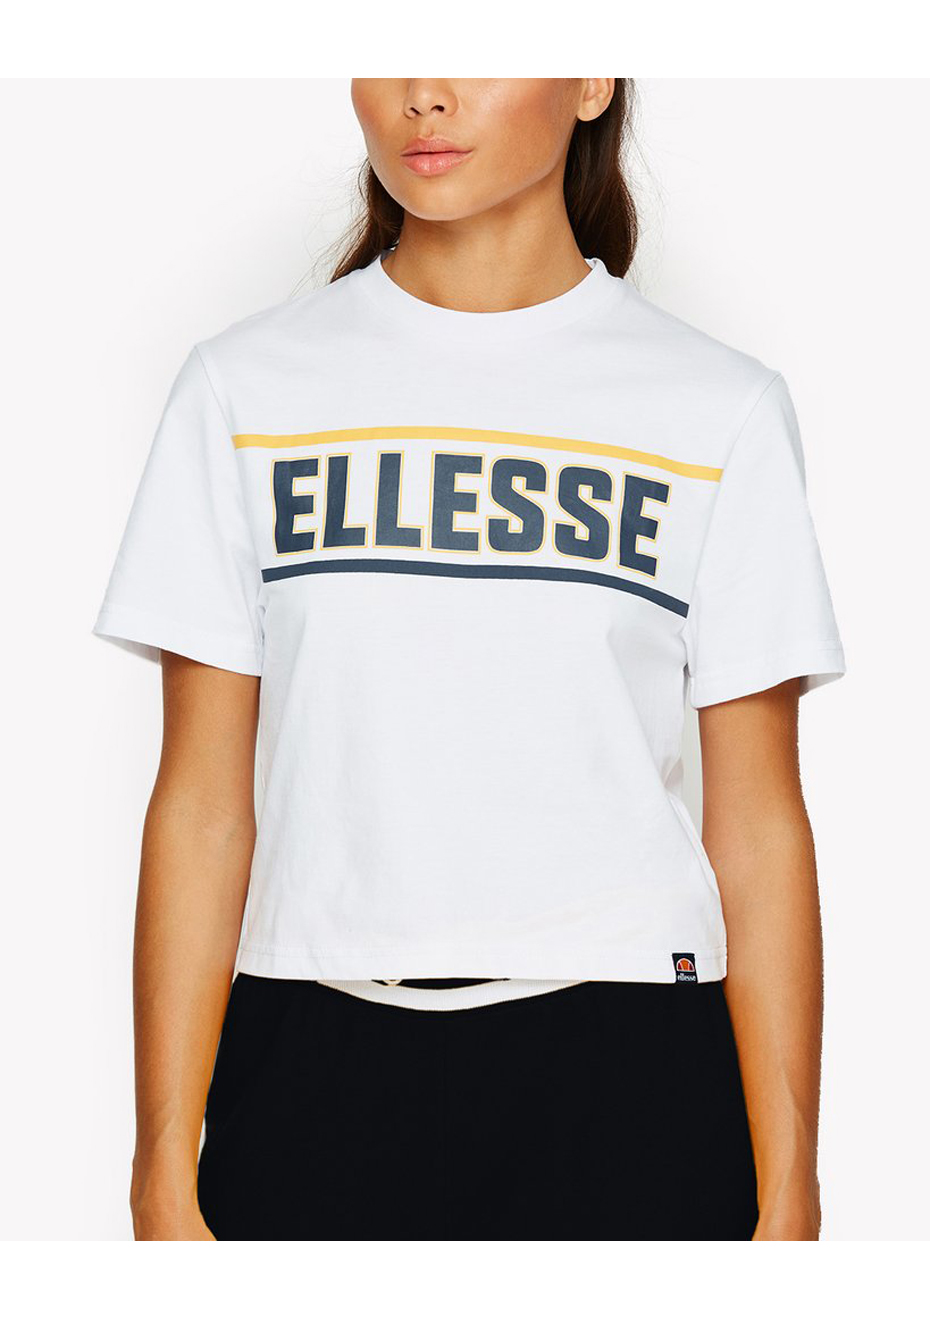 Ellesse - Palermo - White - Shop the 